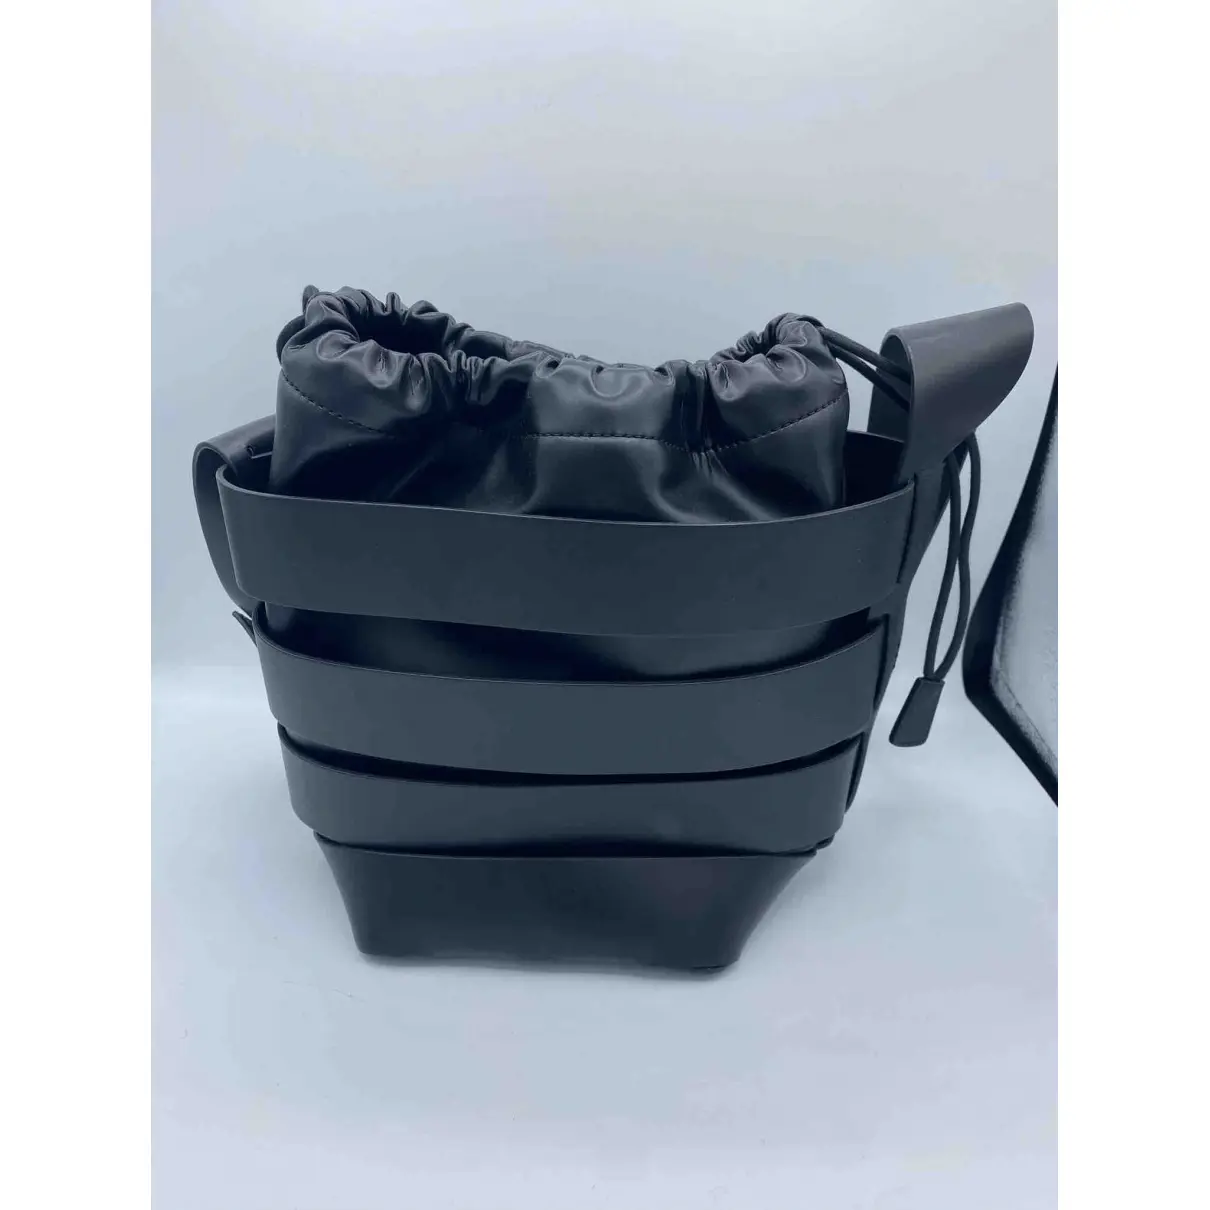 Buy Paco Rabanne Leather handbag online